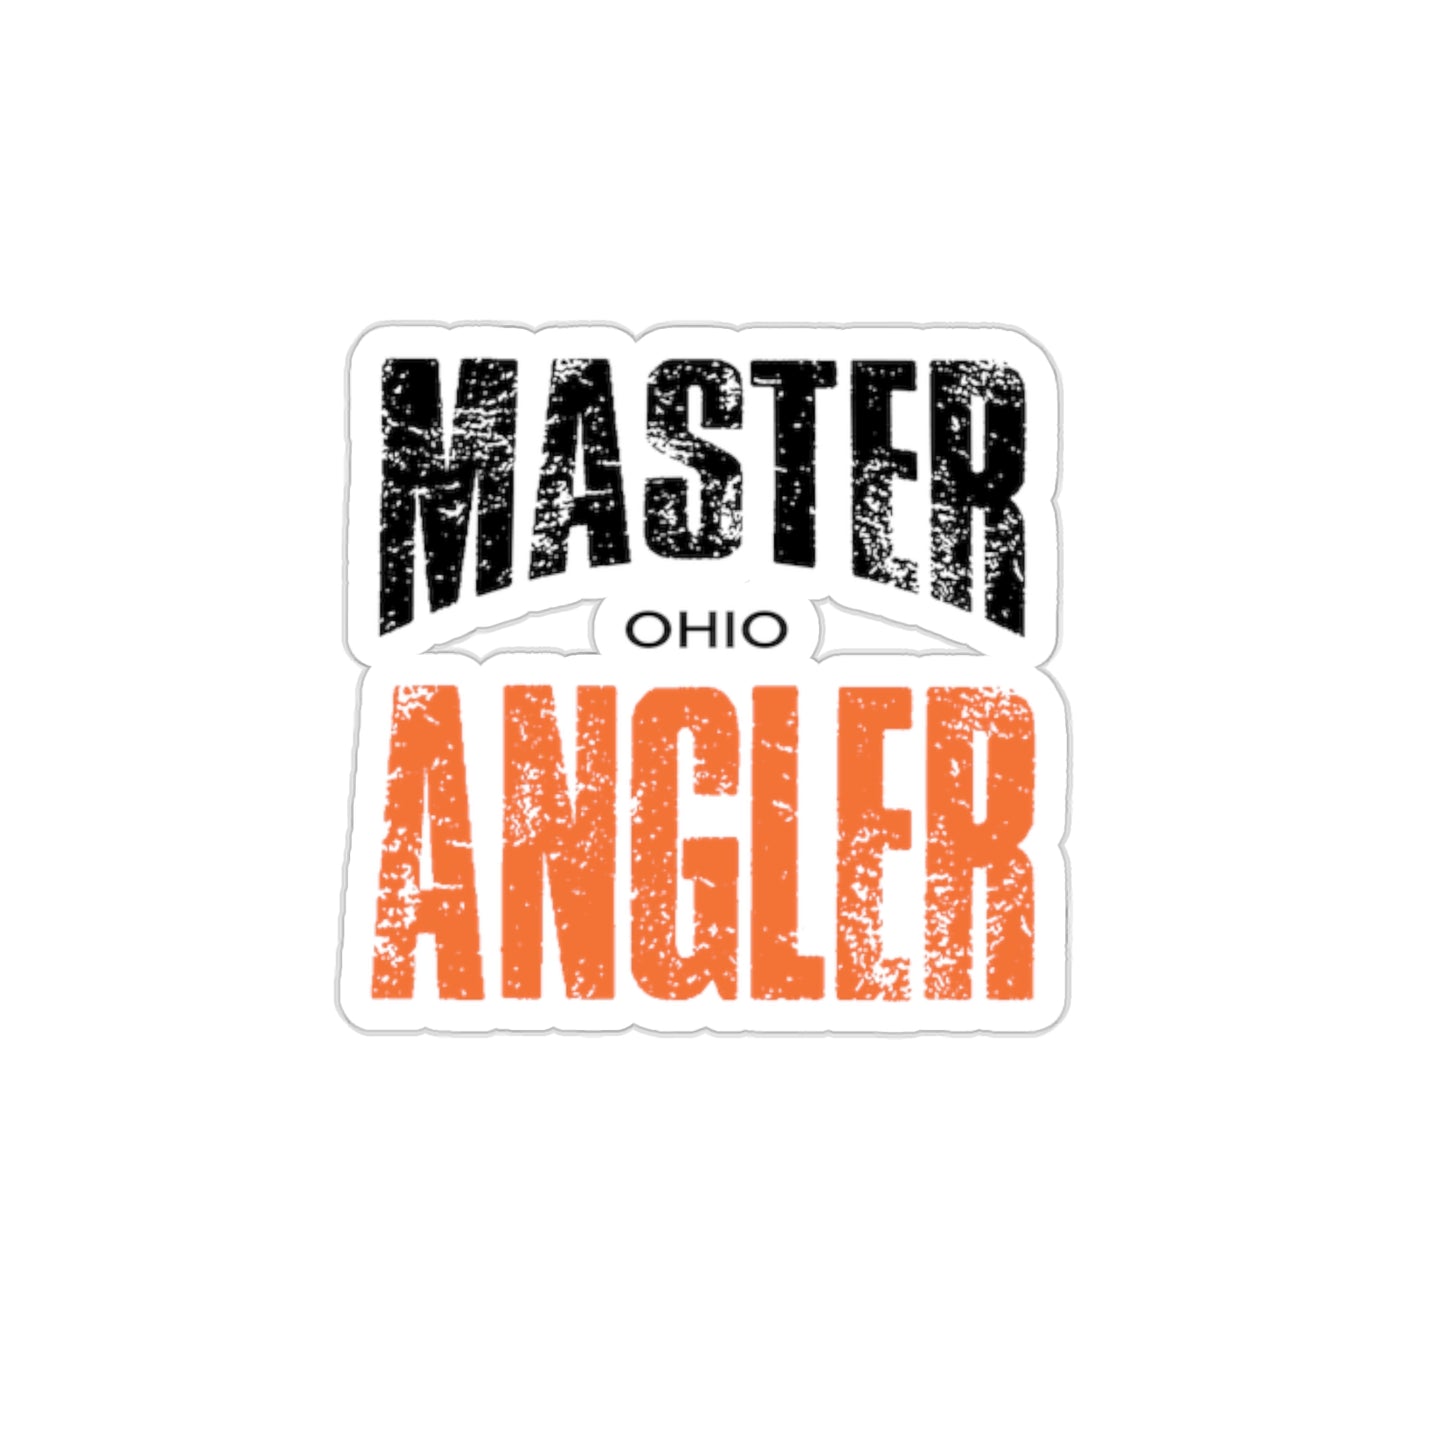 Ohio Master Angler Sticker - ORANGE